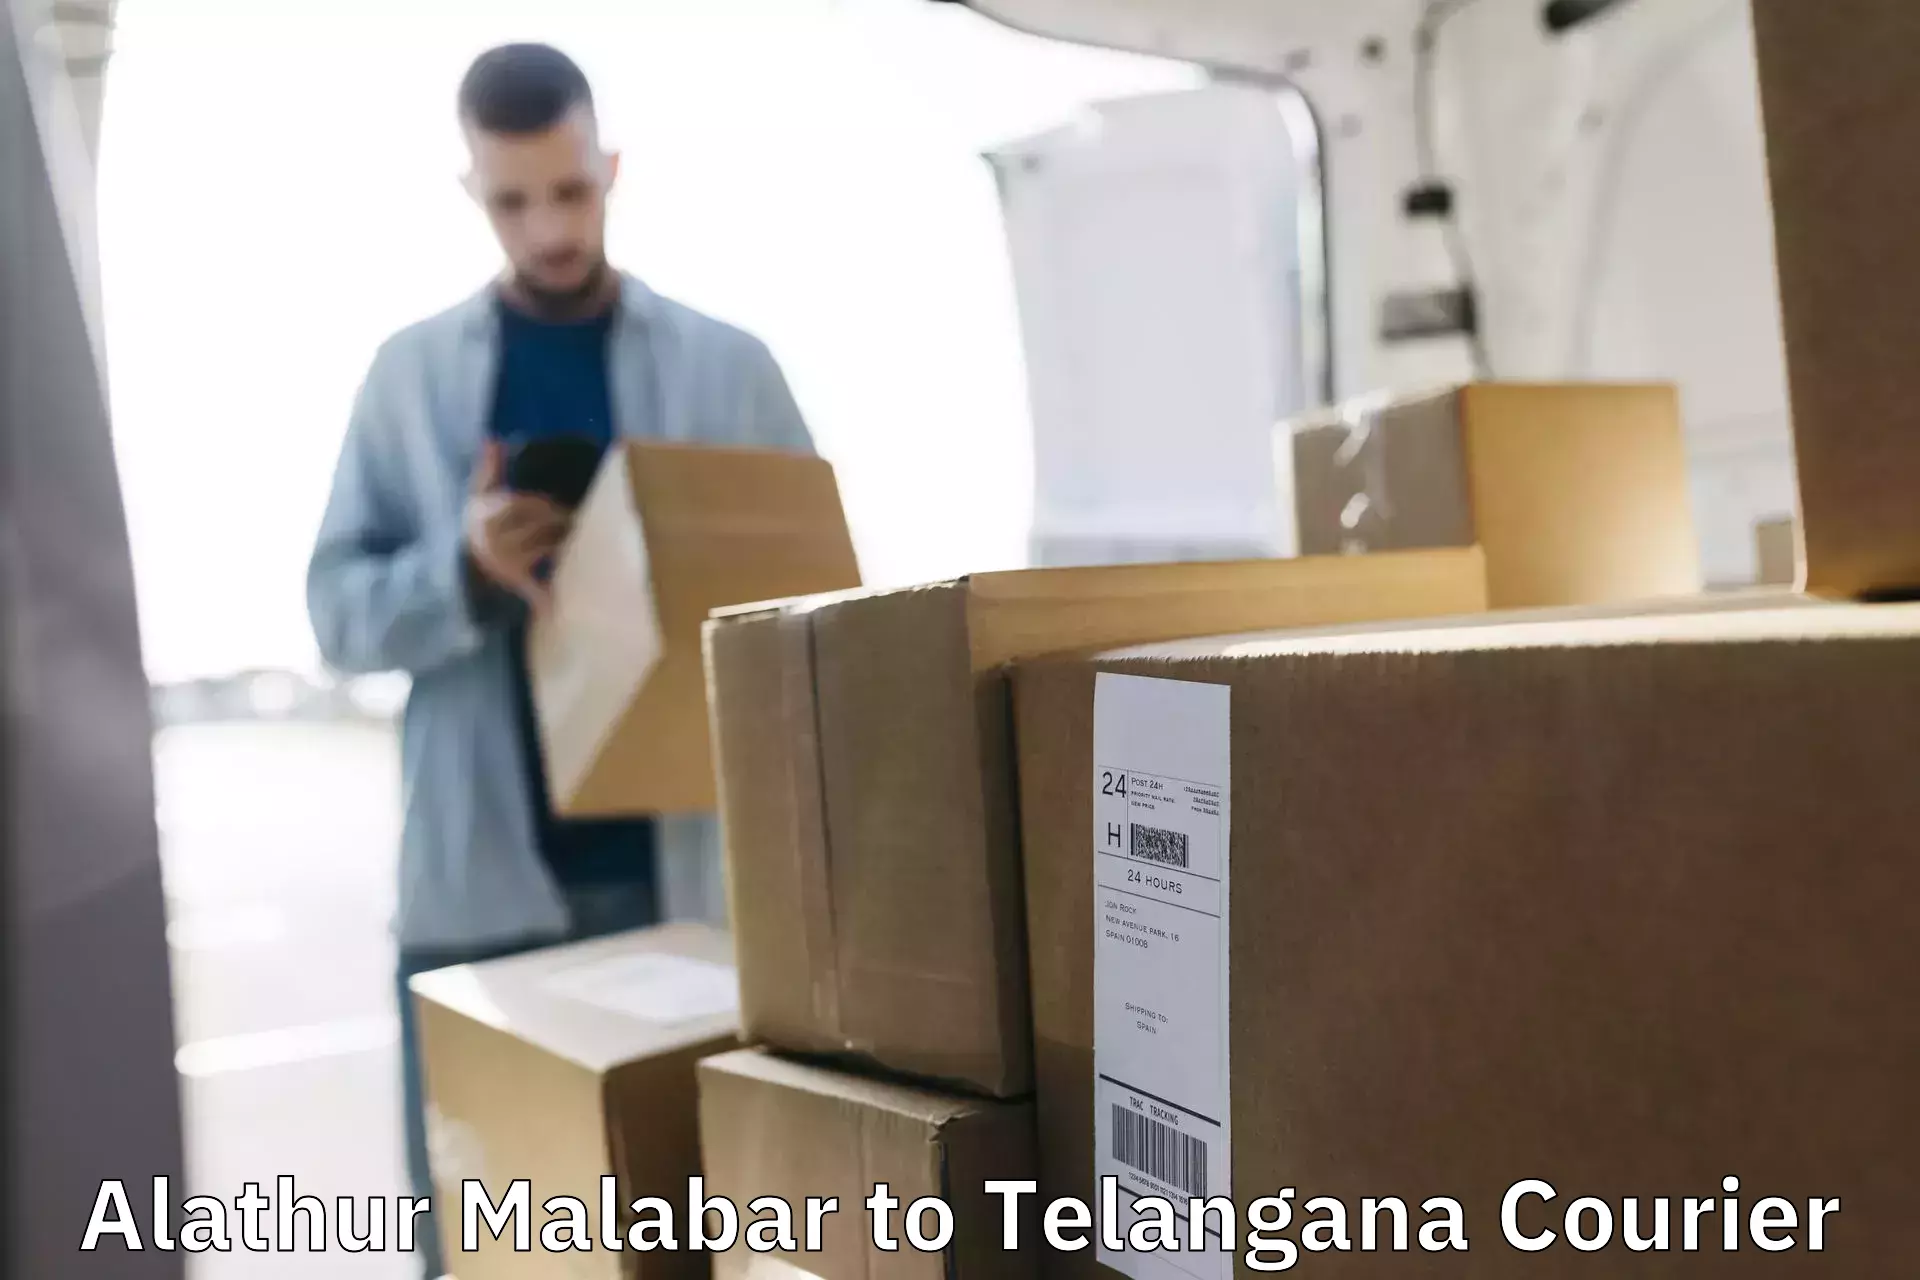 Digital courier platforms Alathur Malabar to Khairatabad